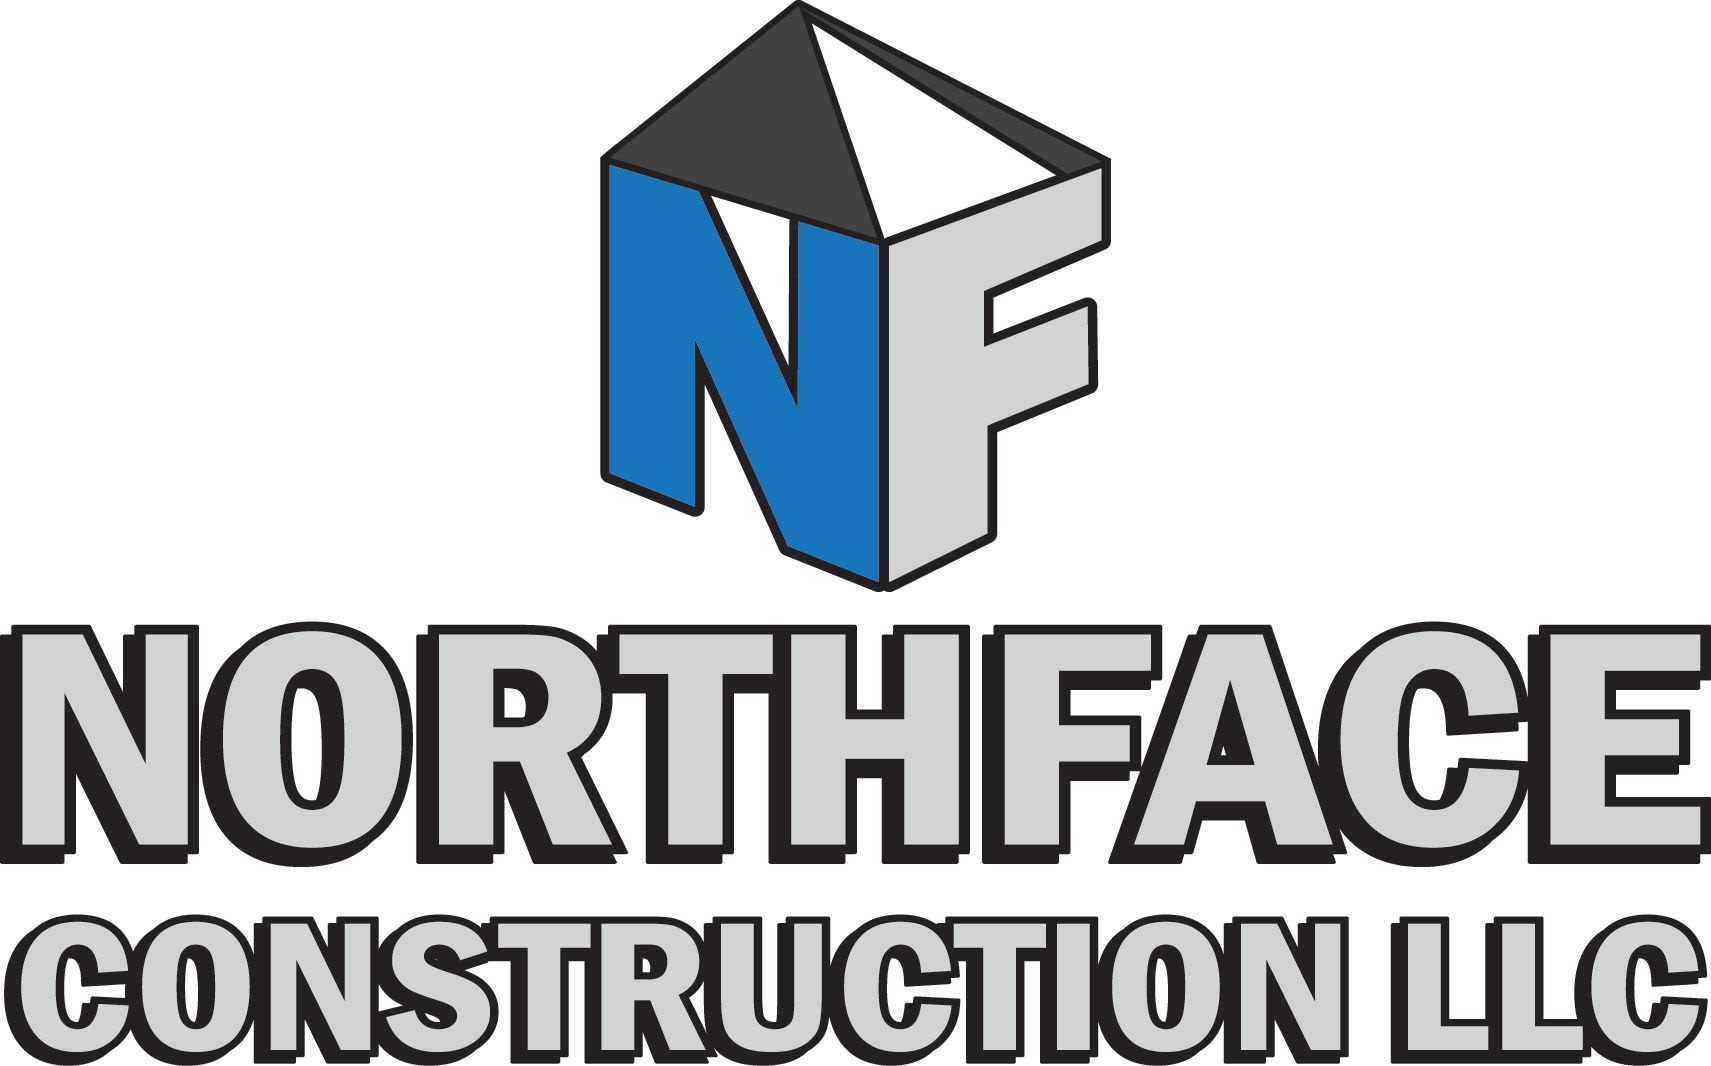 Northface Construction